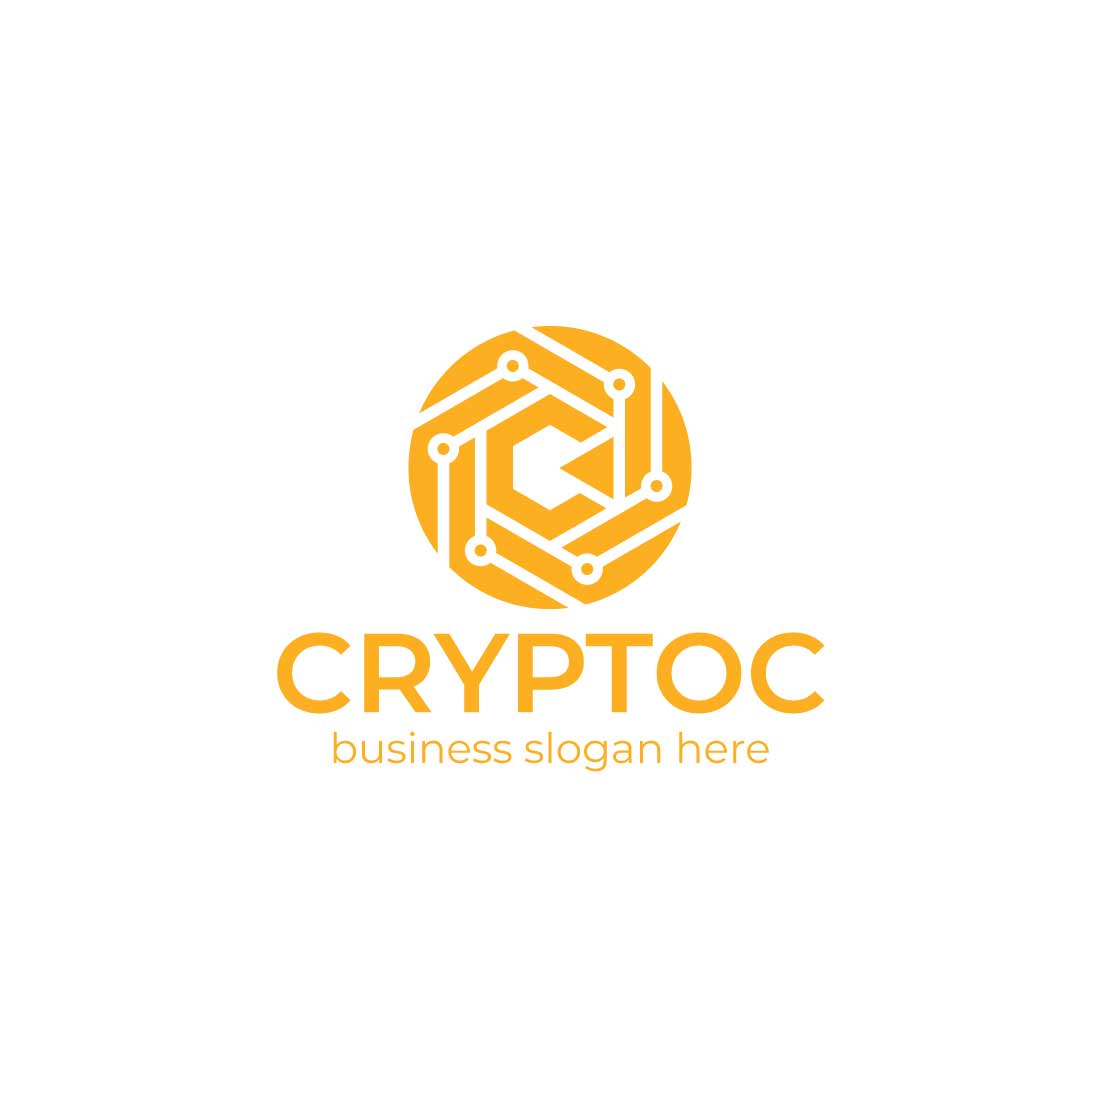 Letter C crypto coin logo design cover image.